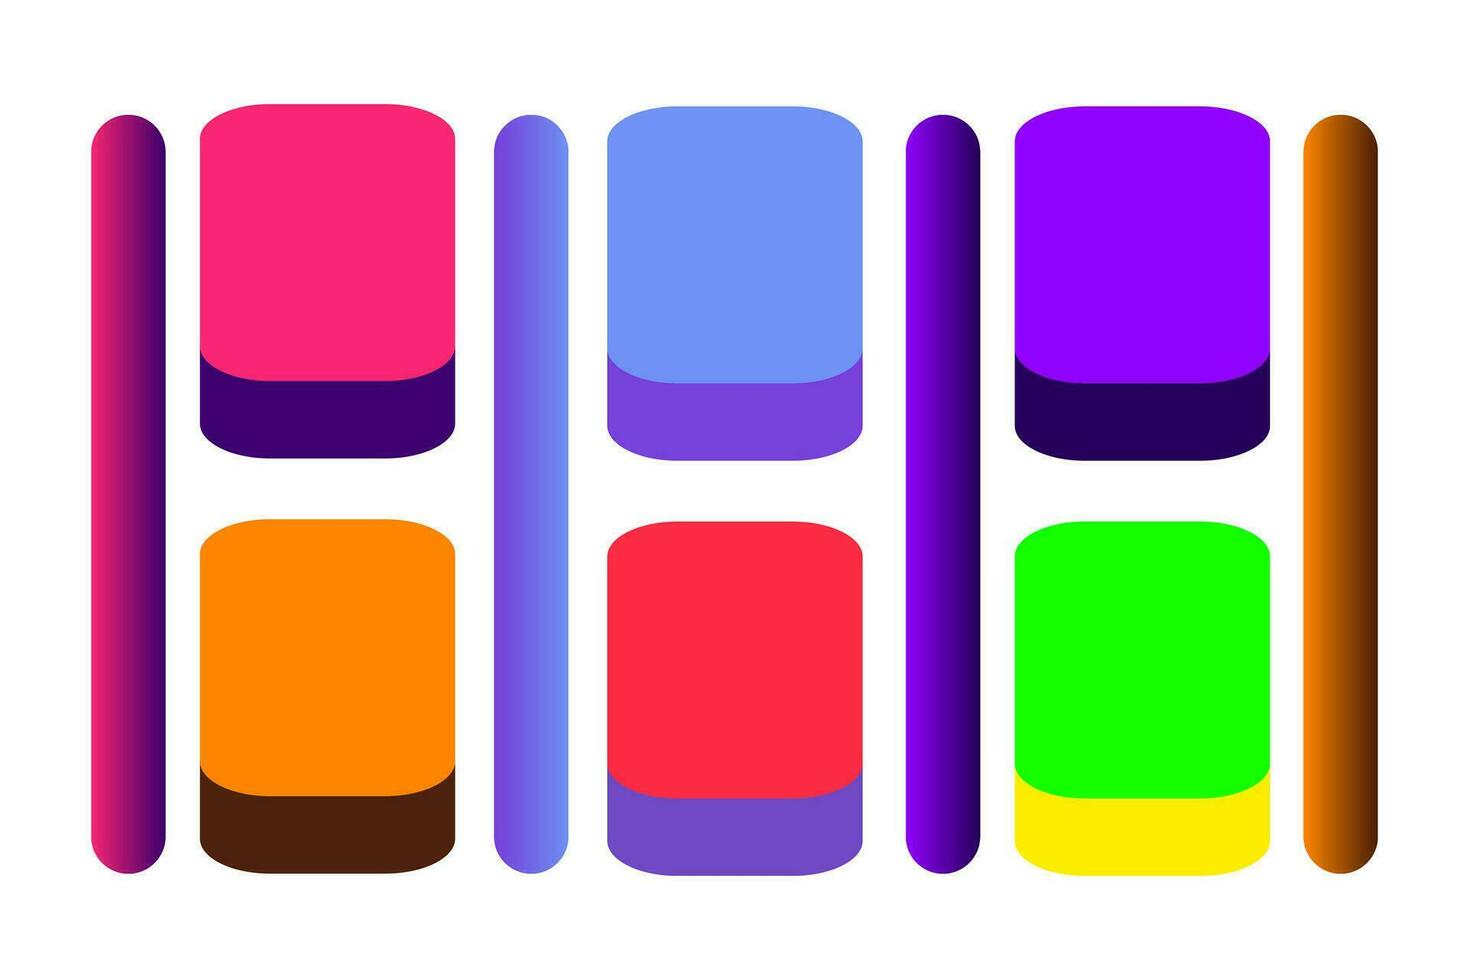 na moda 3d estilo gradiente cor conjunto Projeto combinação cores 3d formas fundo vetor